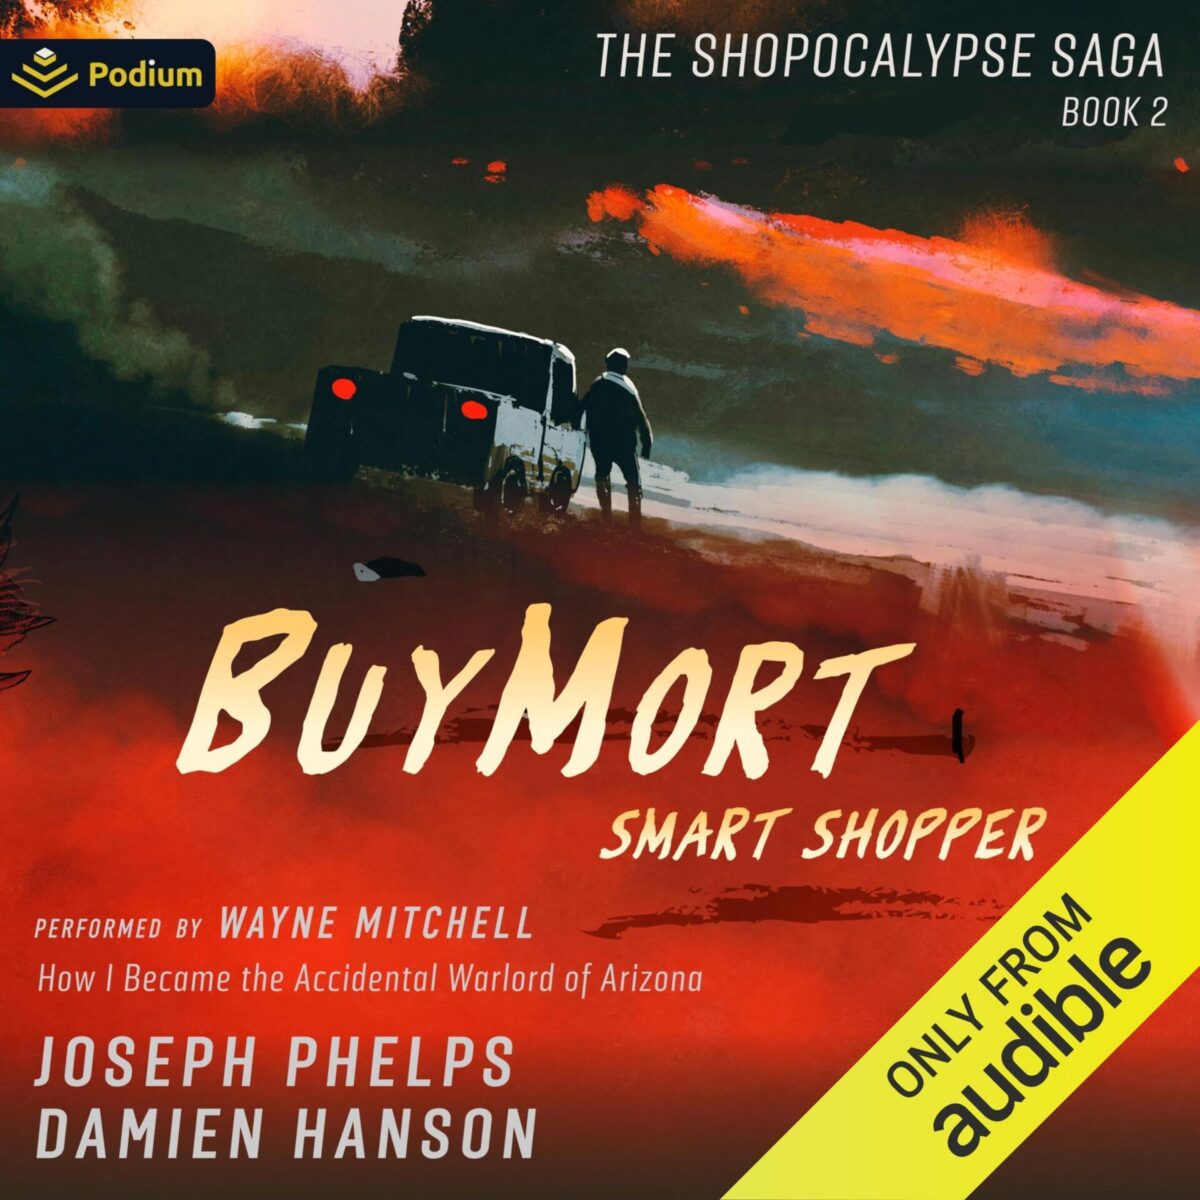 BuyMort: Smart Shopper – The Audiobook Review